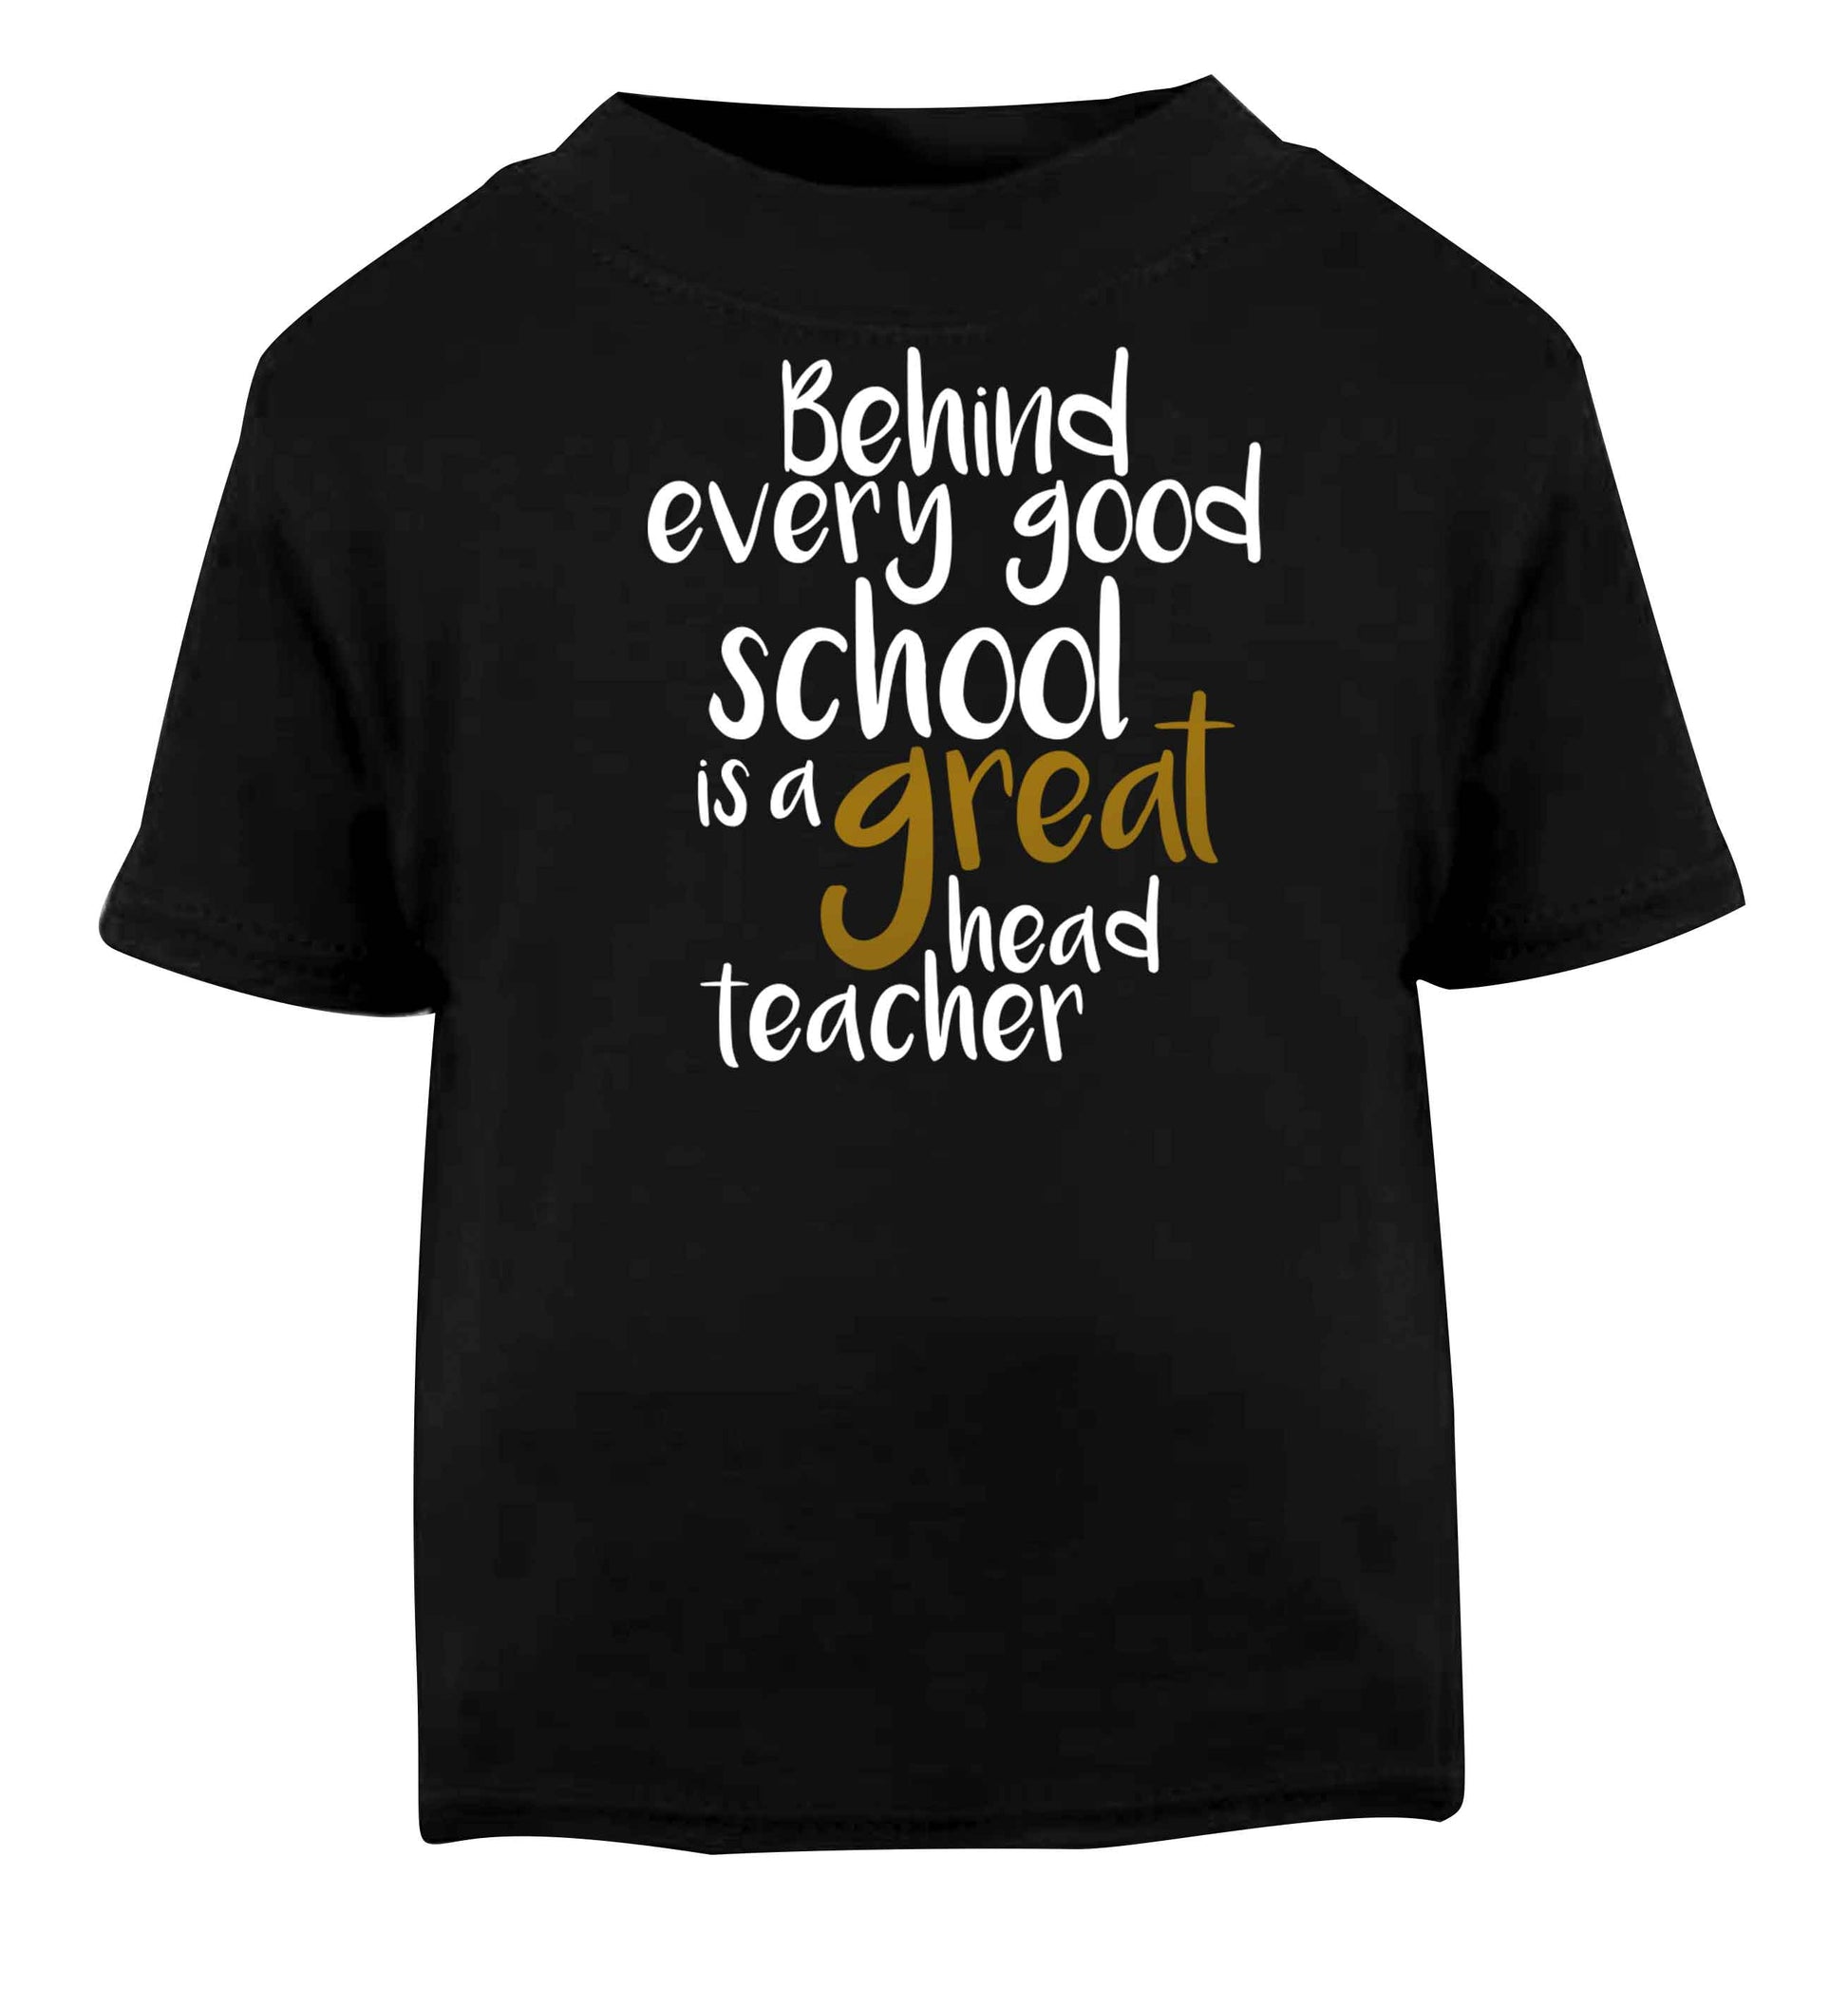 Behind every good school is a great head teacher Black baby toddler Tshirt 2 years